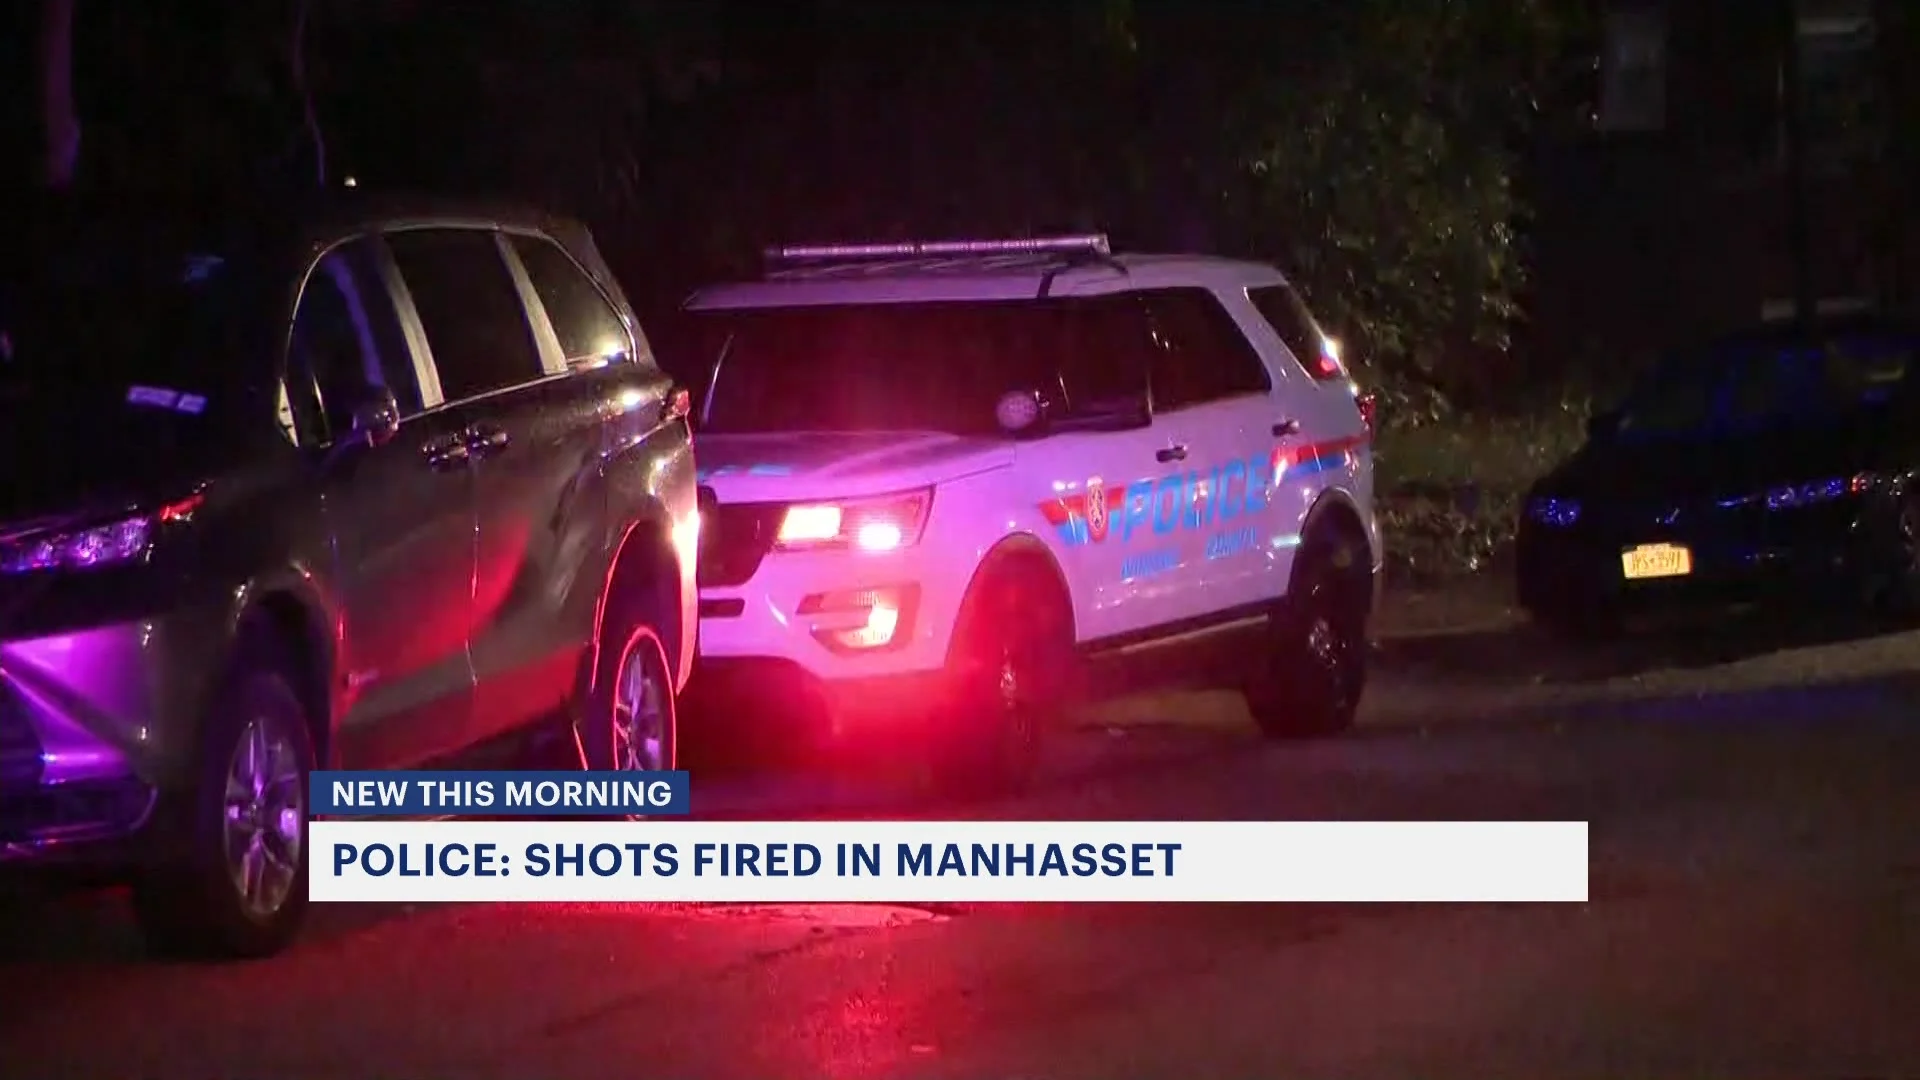 Nassau police probe shooting incident in Manhasset